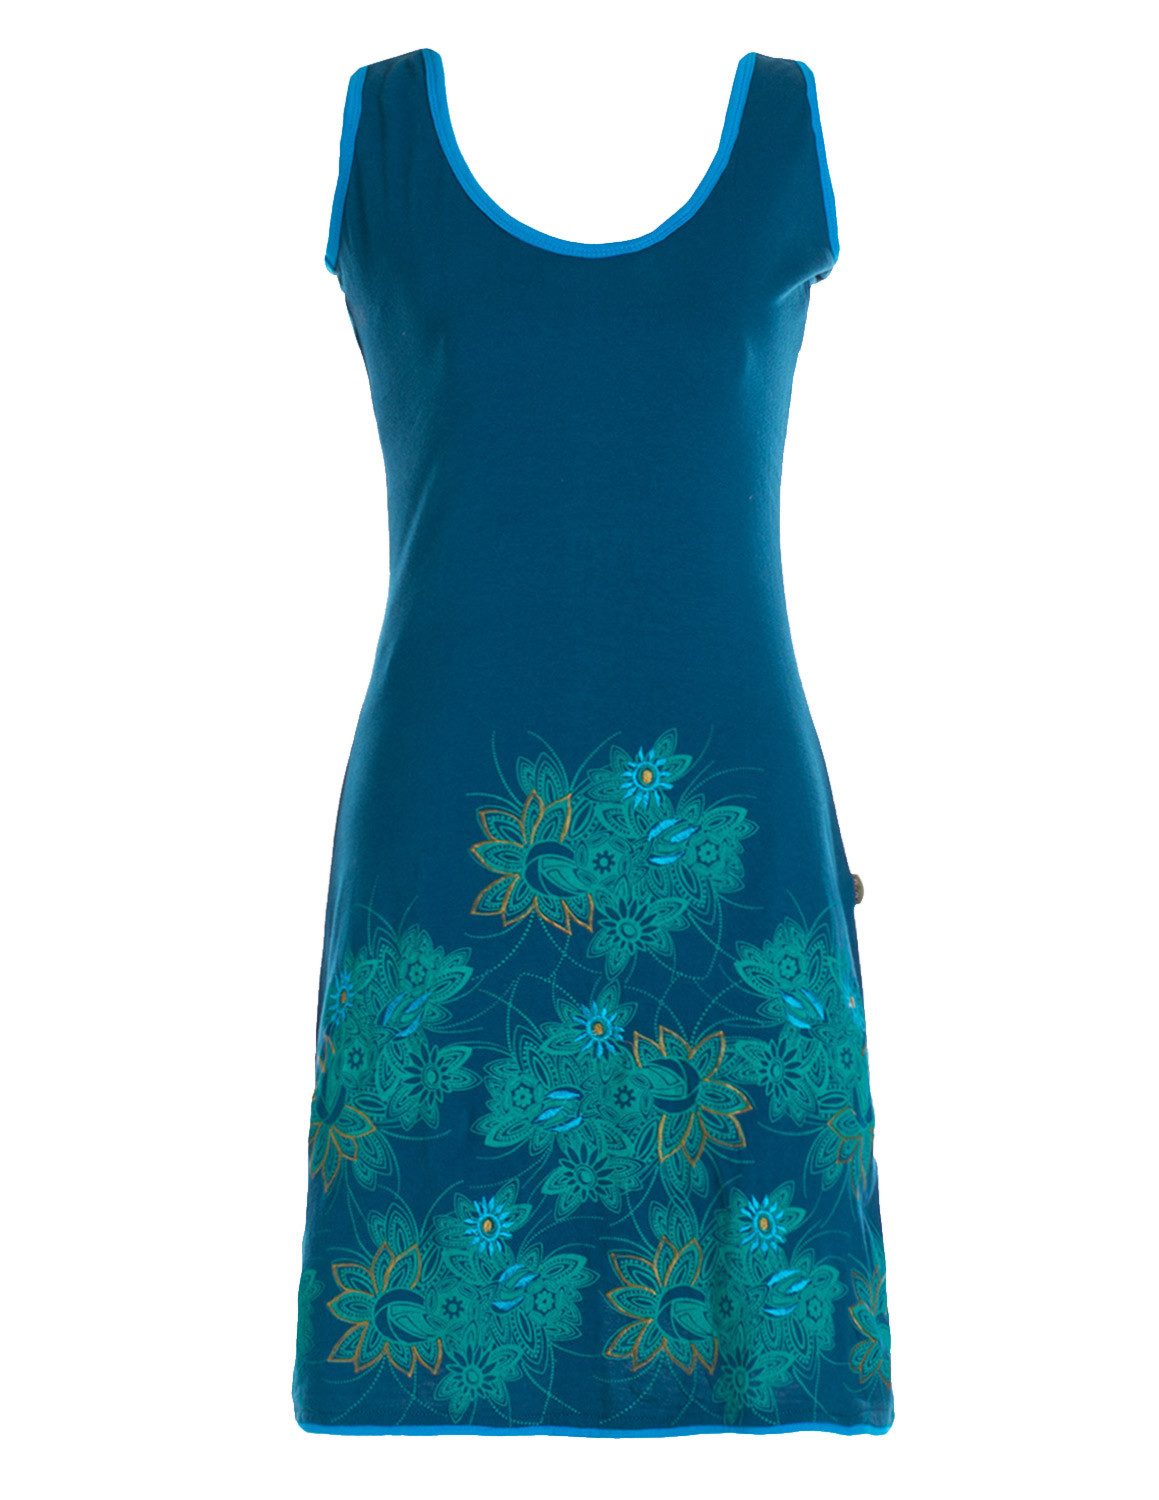 Vishes Tunikakleid Damen Longshirt-Kleid Sommer Mini-Kleid Tunika-Kleid Shirtkleid Boho, Goa, Hippie Style